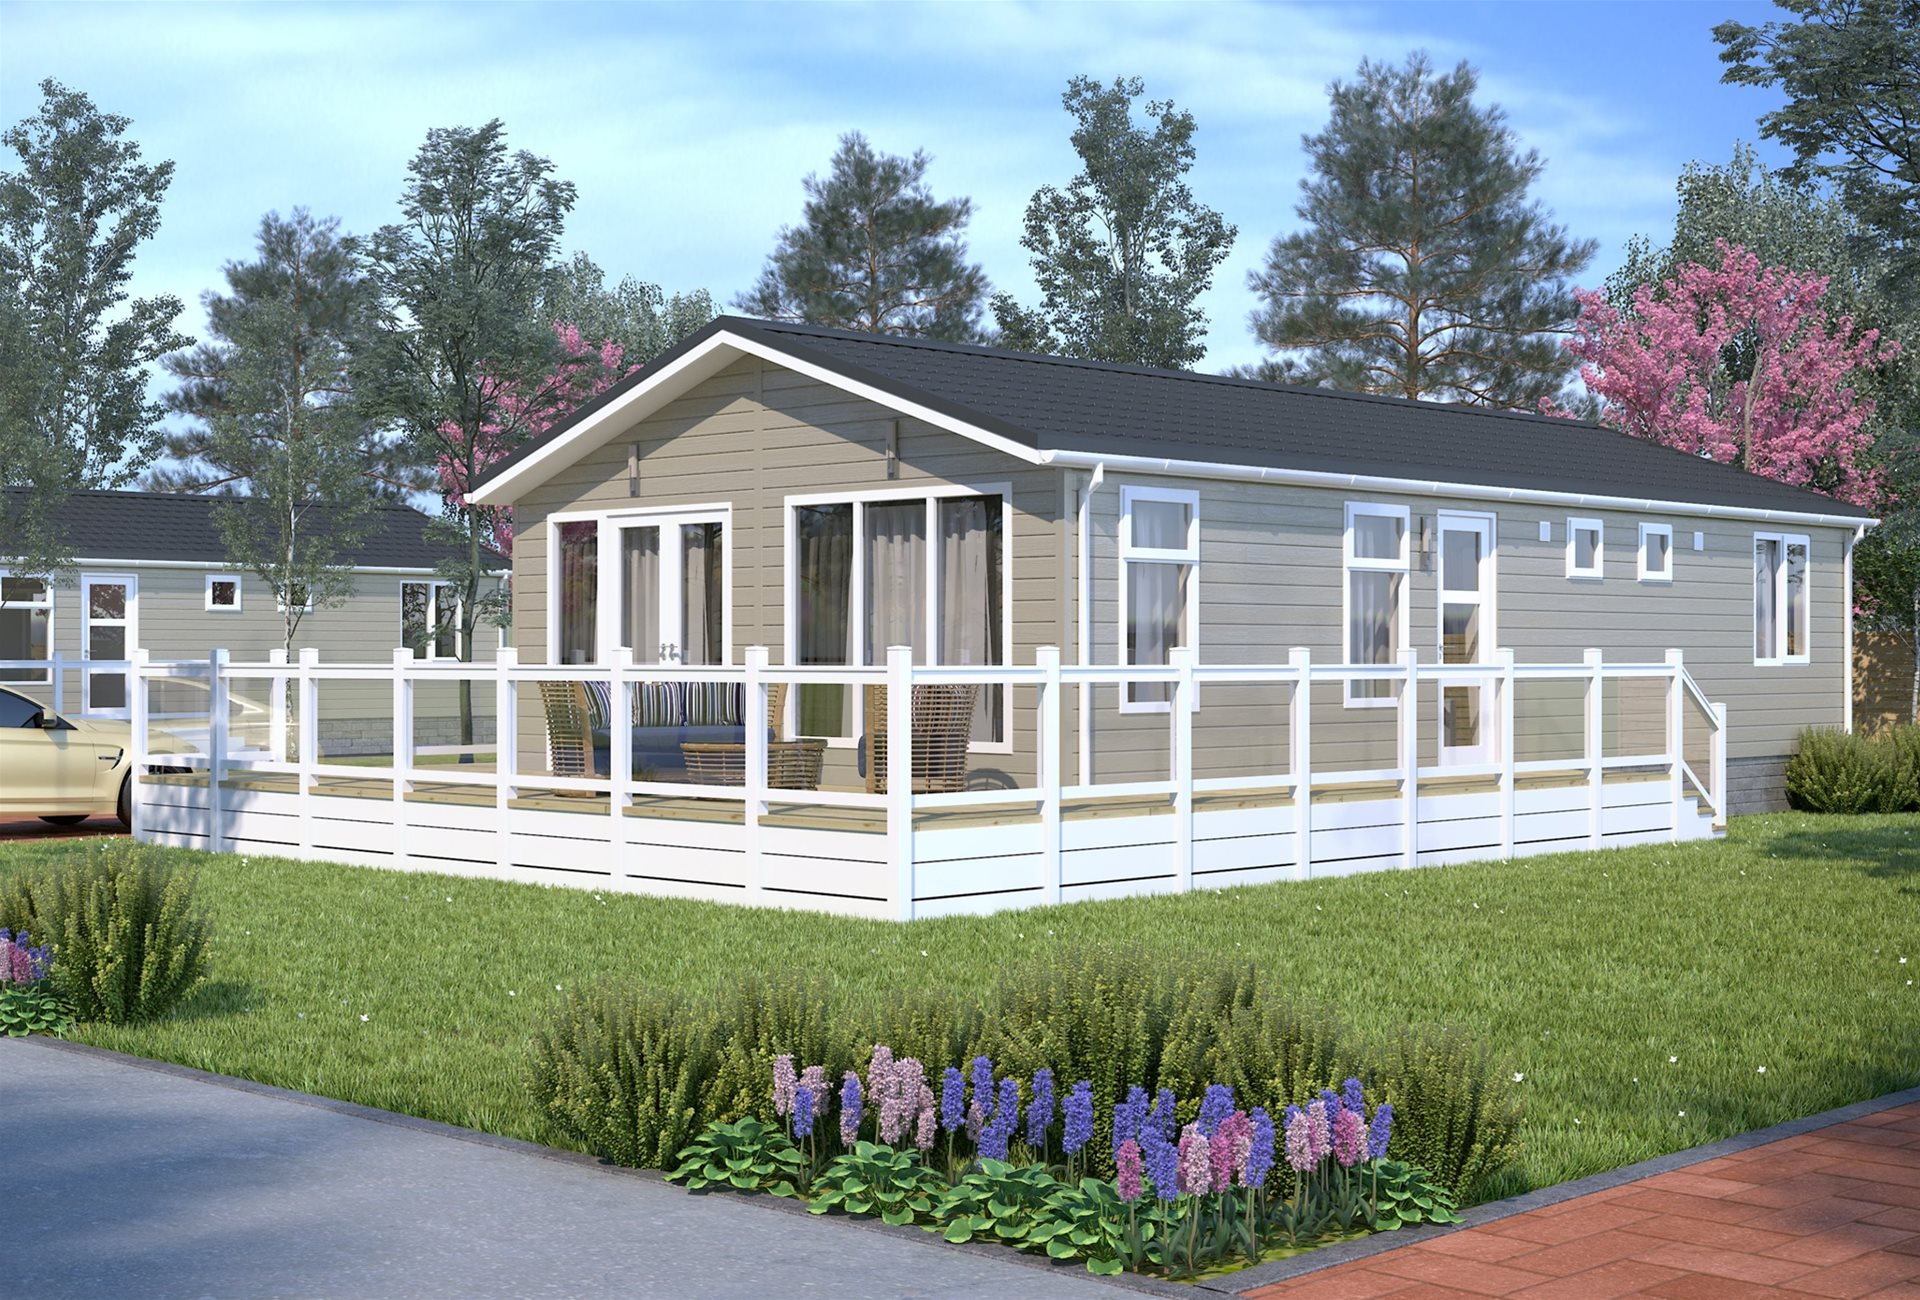 New Landscape Living Sandringham luxury lodge twin unit static caravan mobile home bespoke